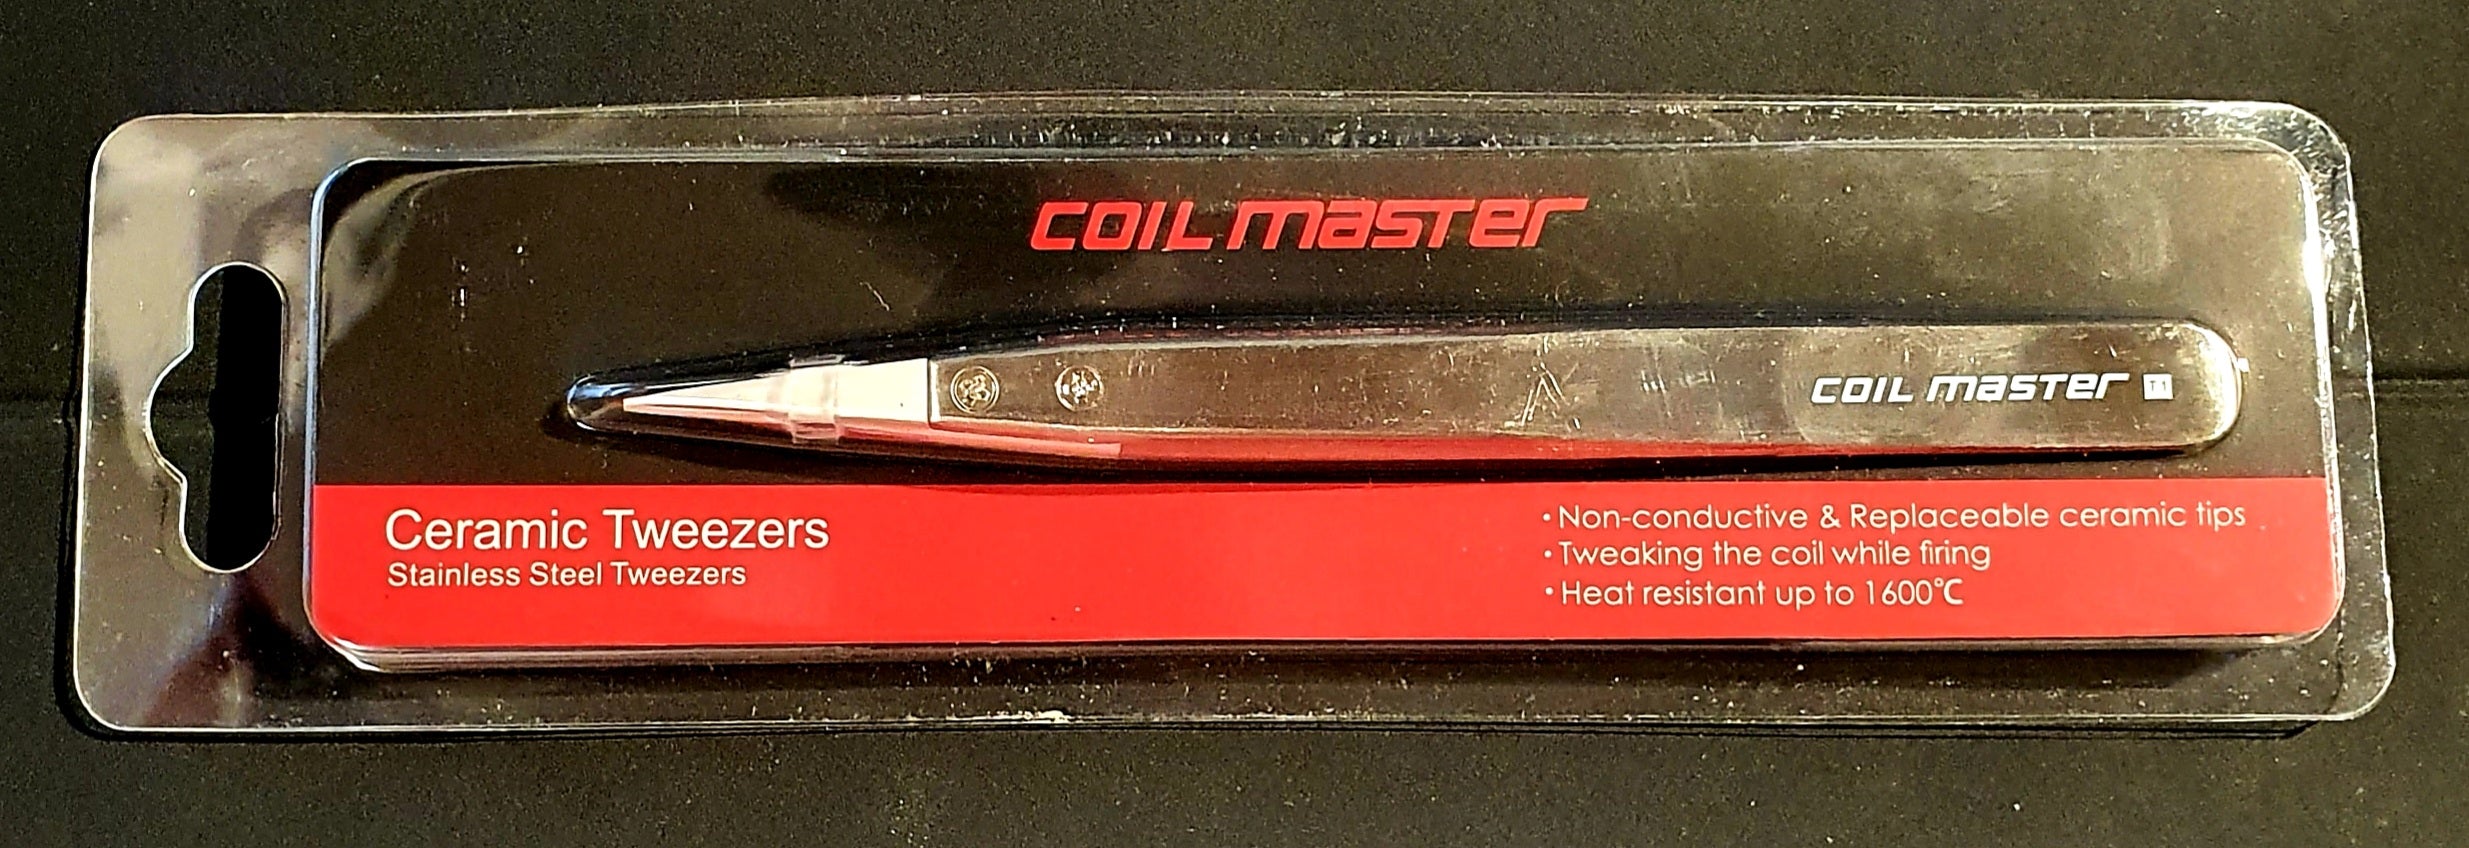 Coil Master Ceramic Tweezers (Bent) - Coil Master